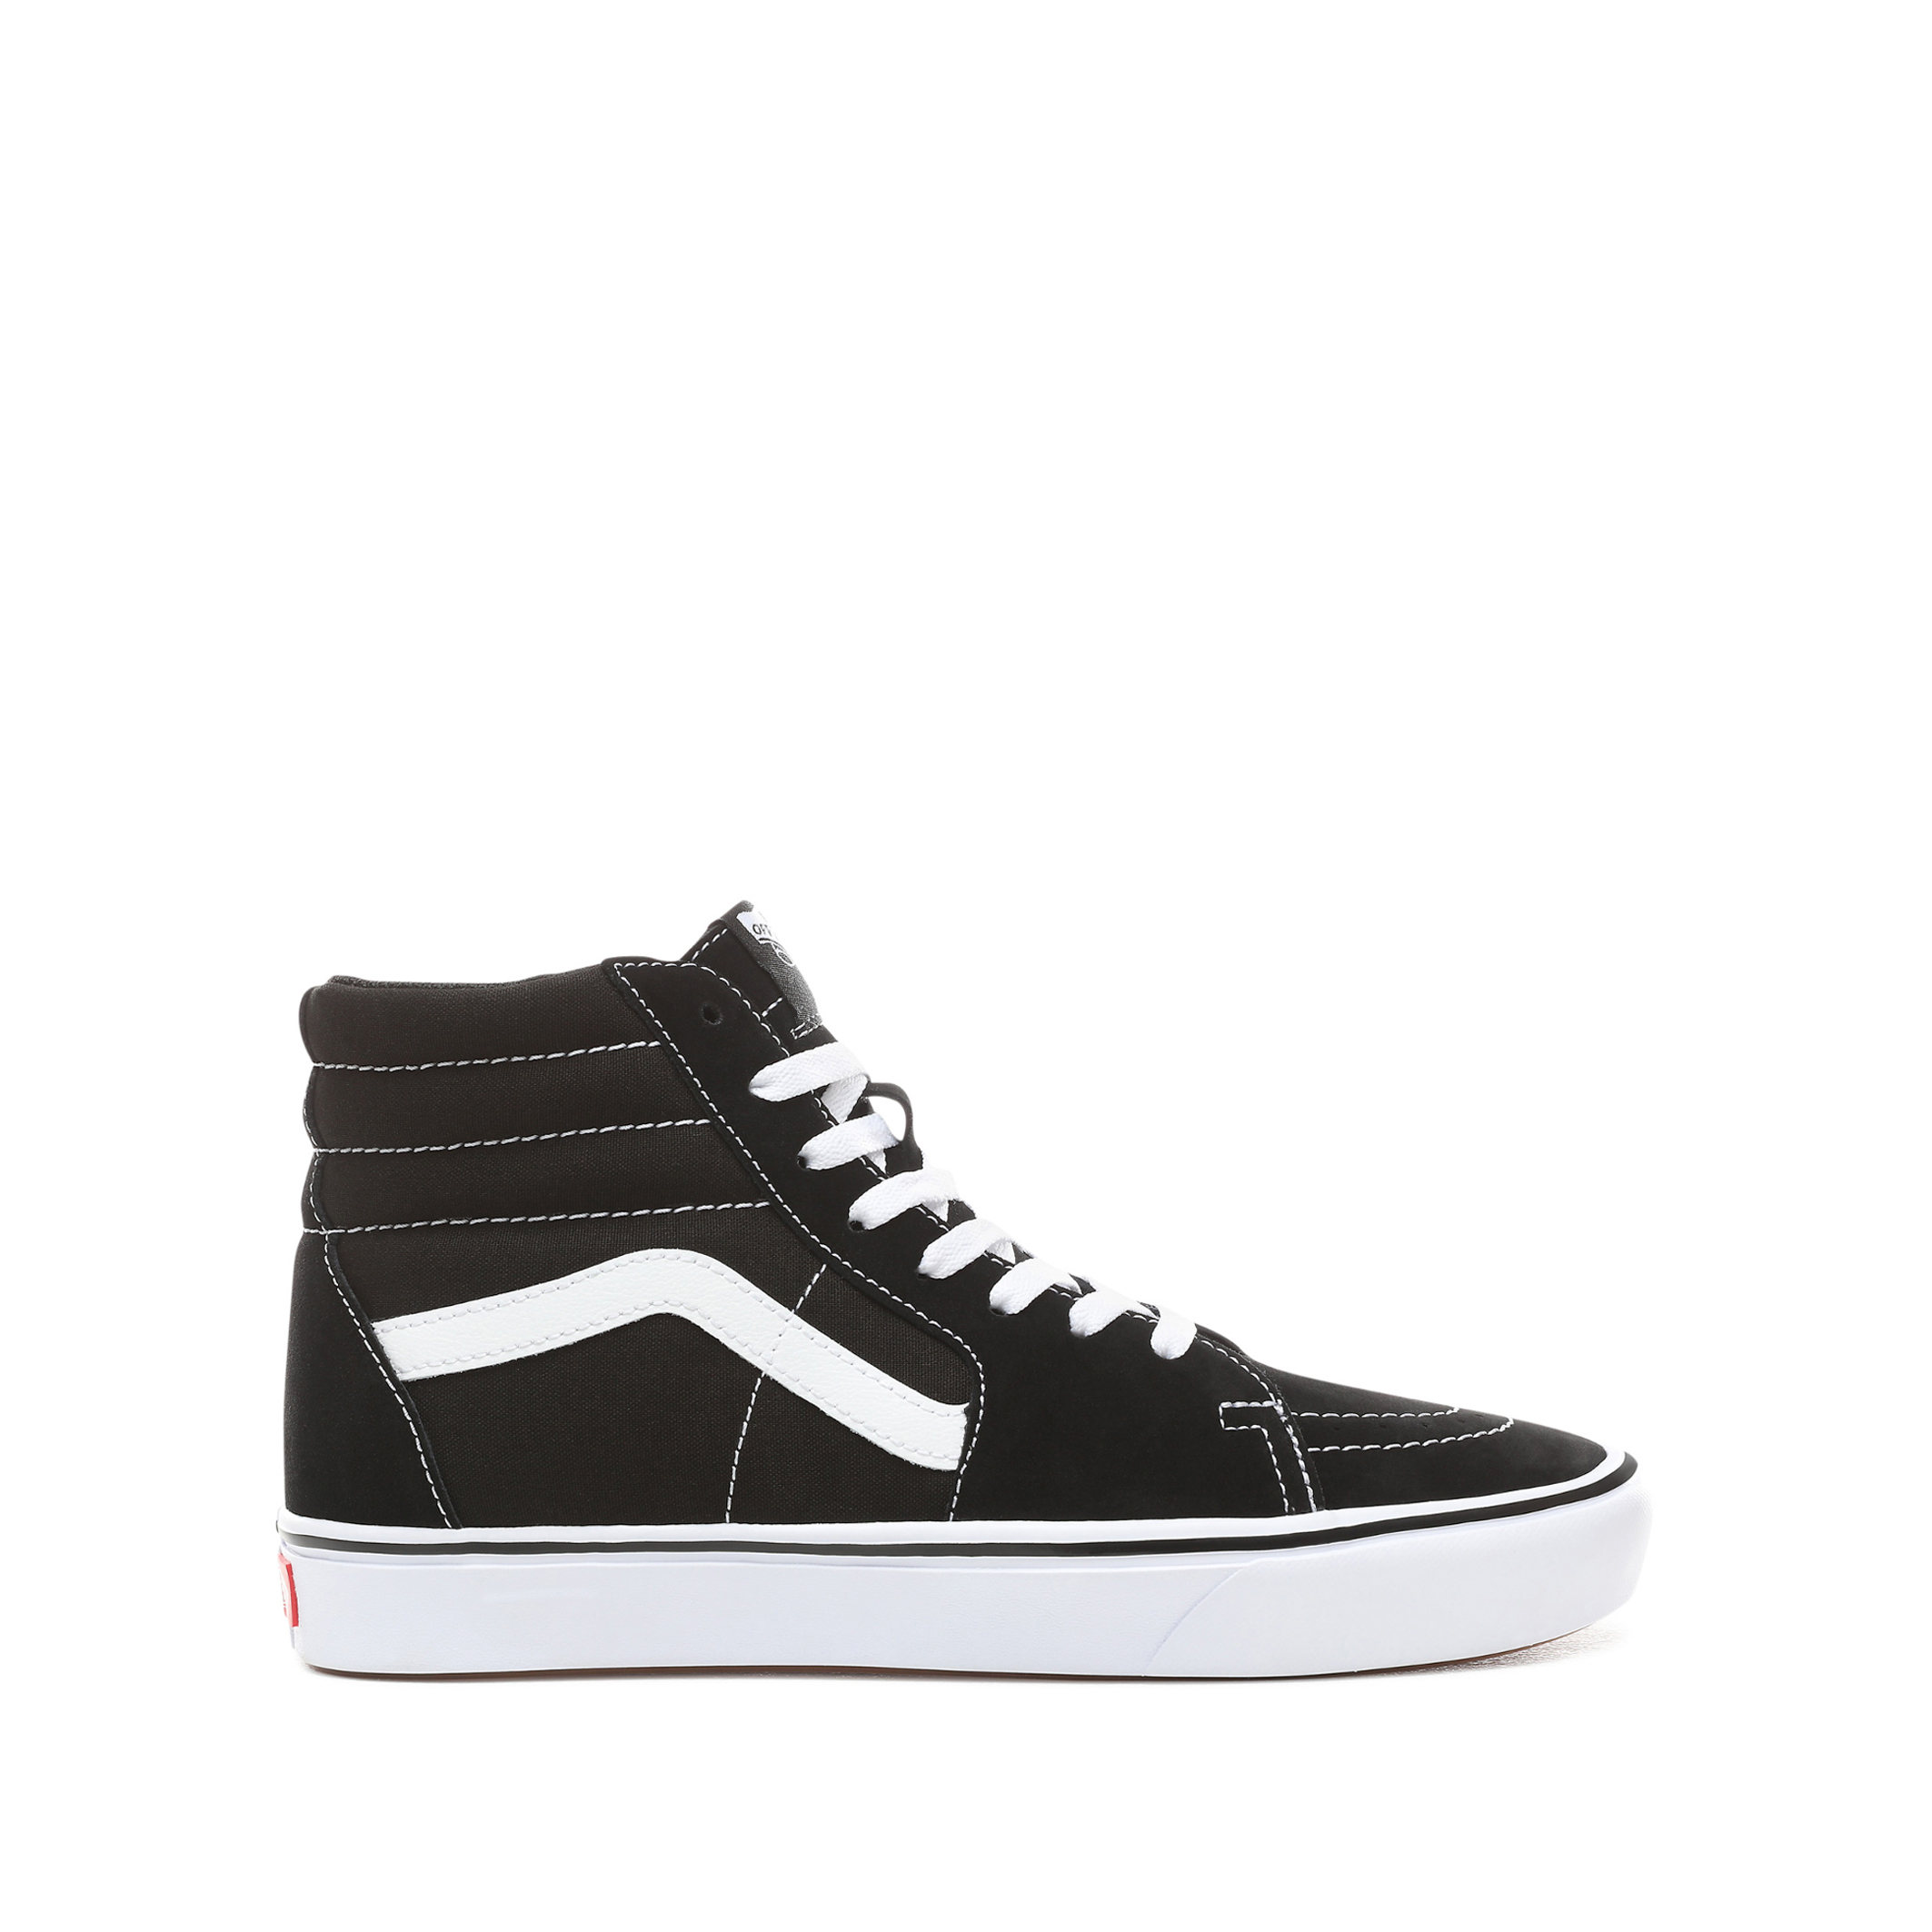 Comfycush sk8-hi flatform trainers in leather , black/white, Vans | La ...